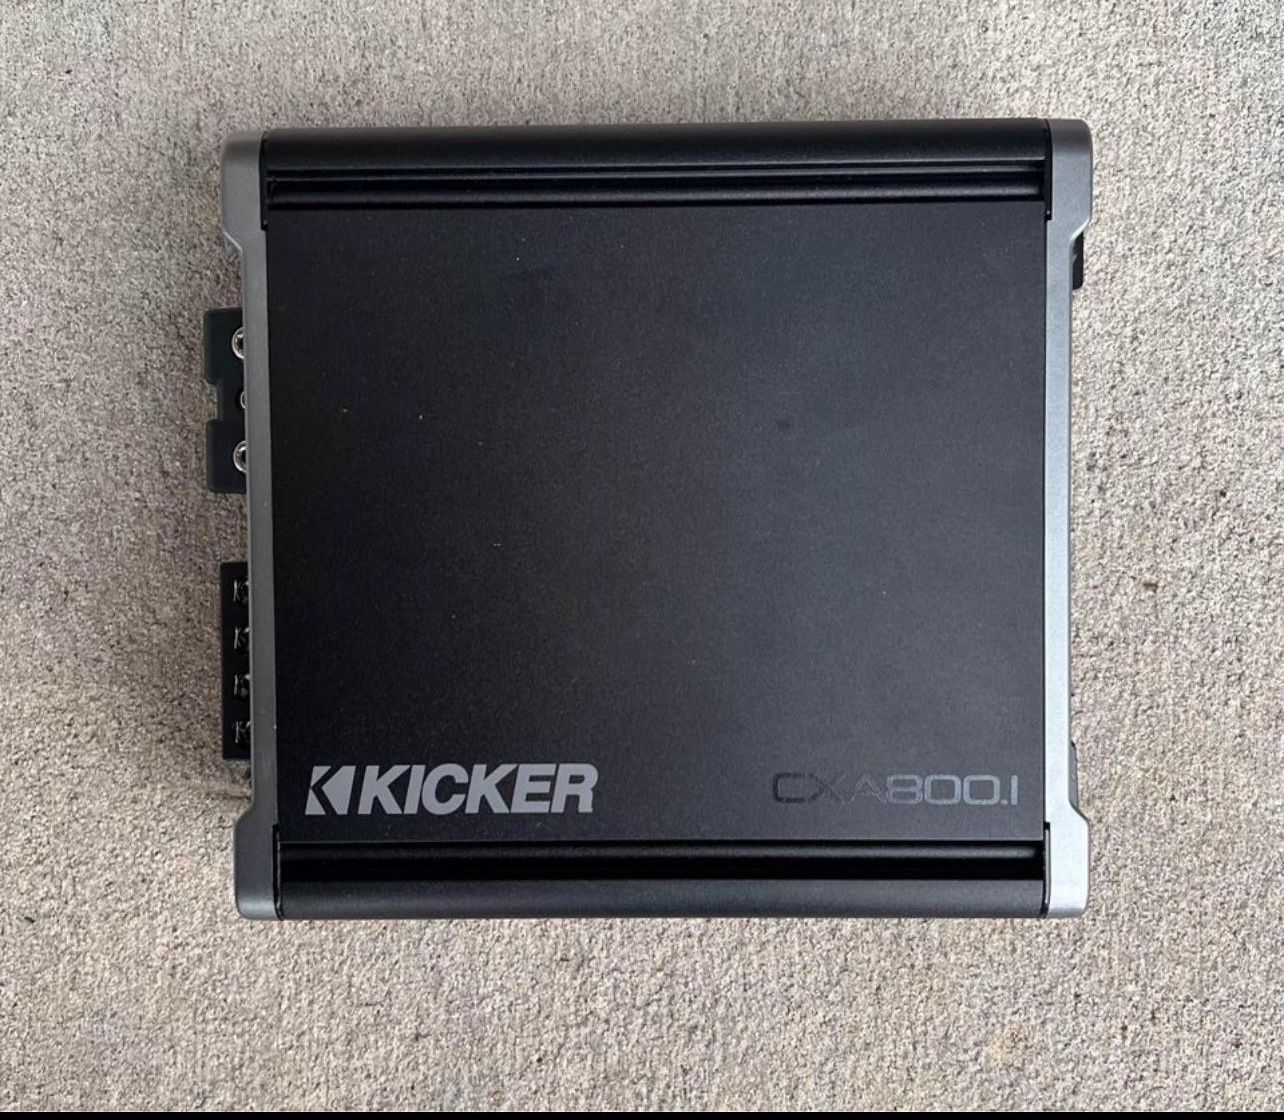 KICKER REAL 800 watts RMS CLASS D MONO AMP